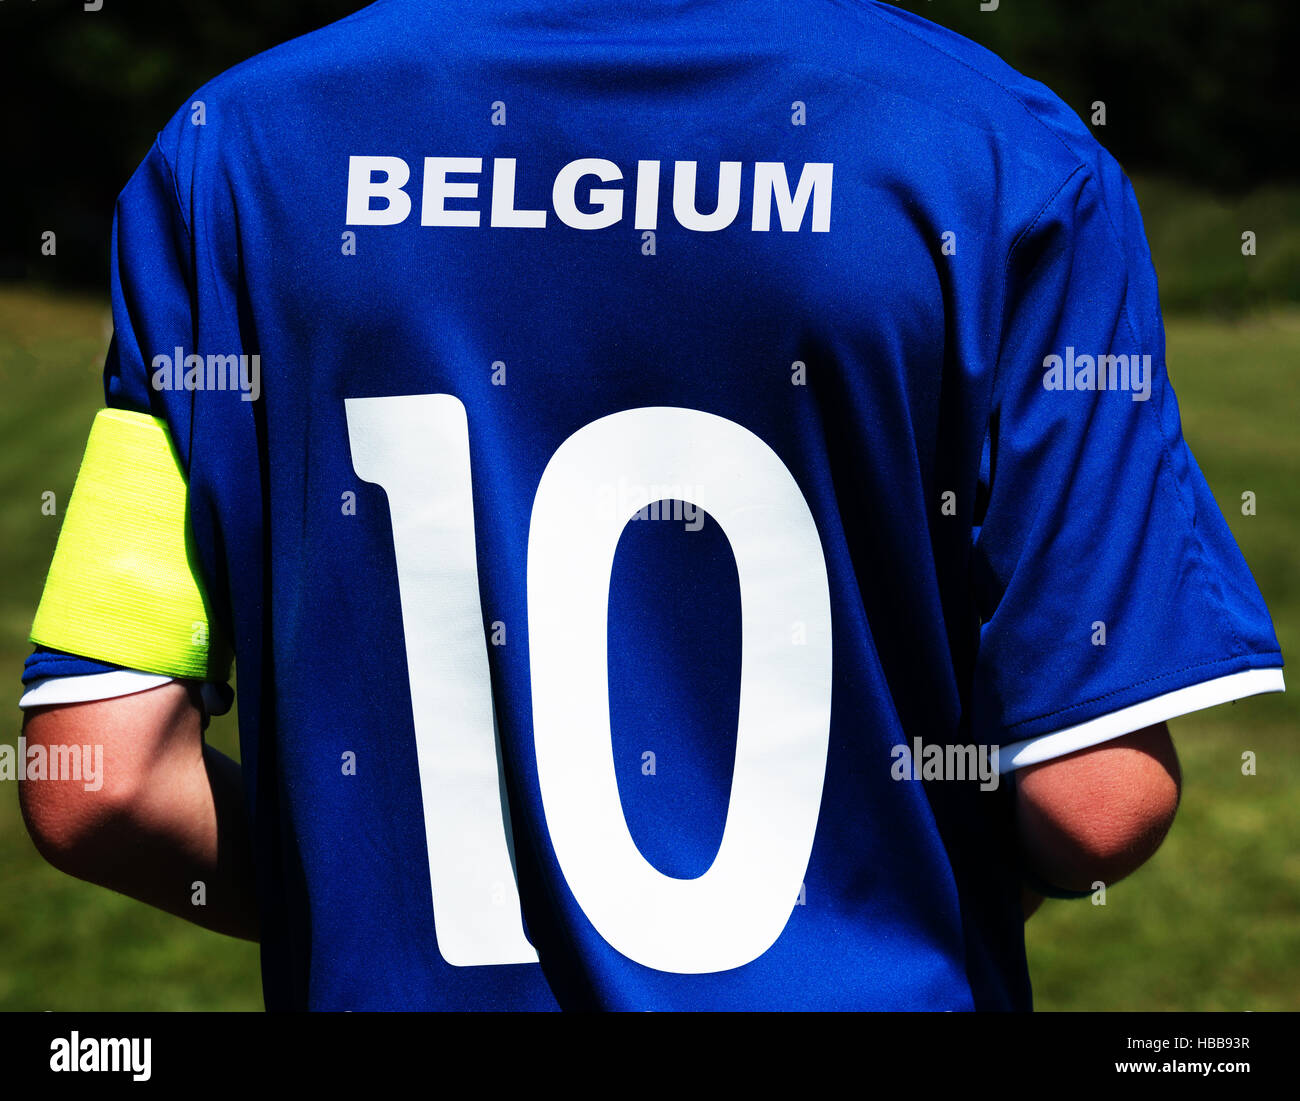 belgium national football team uniform